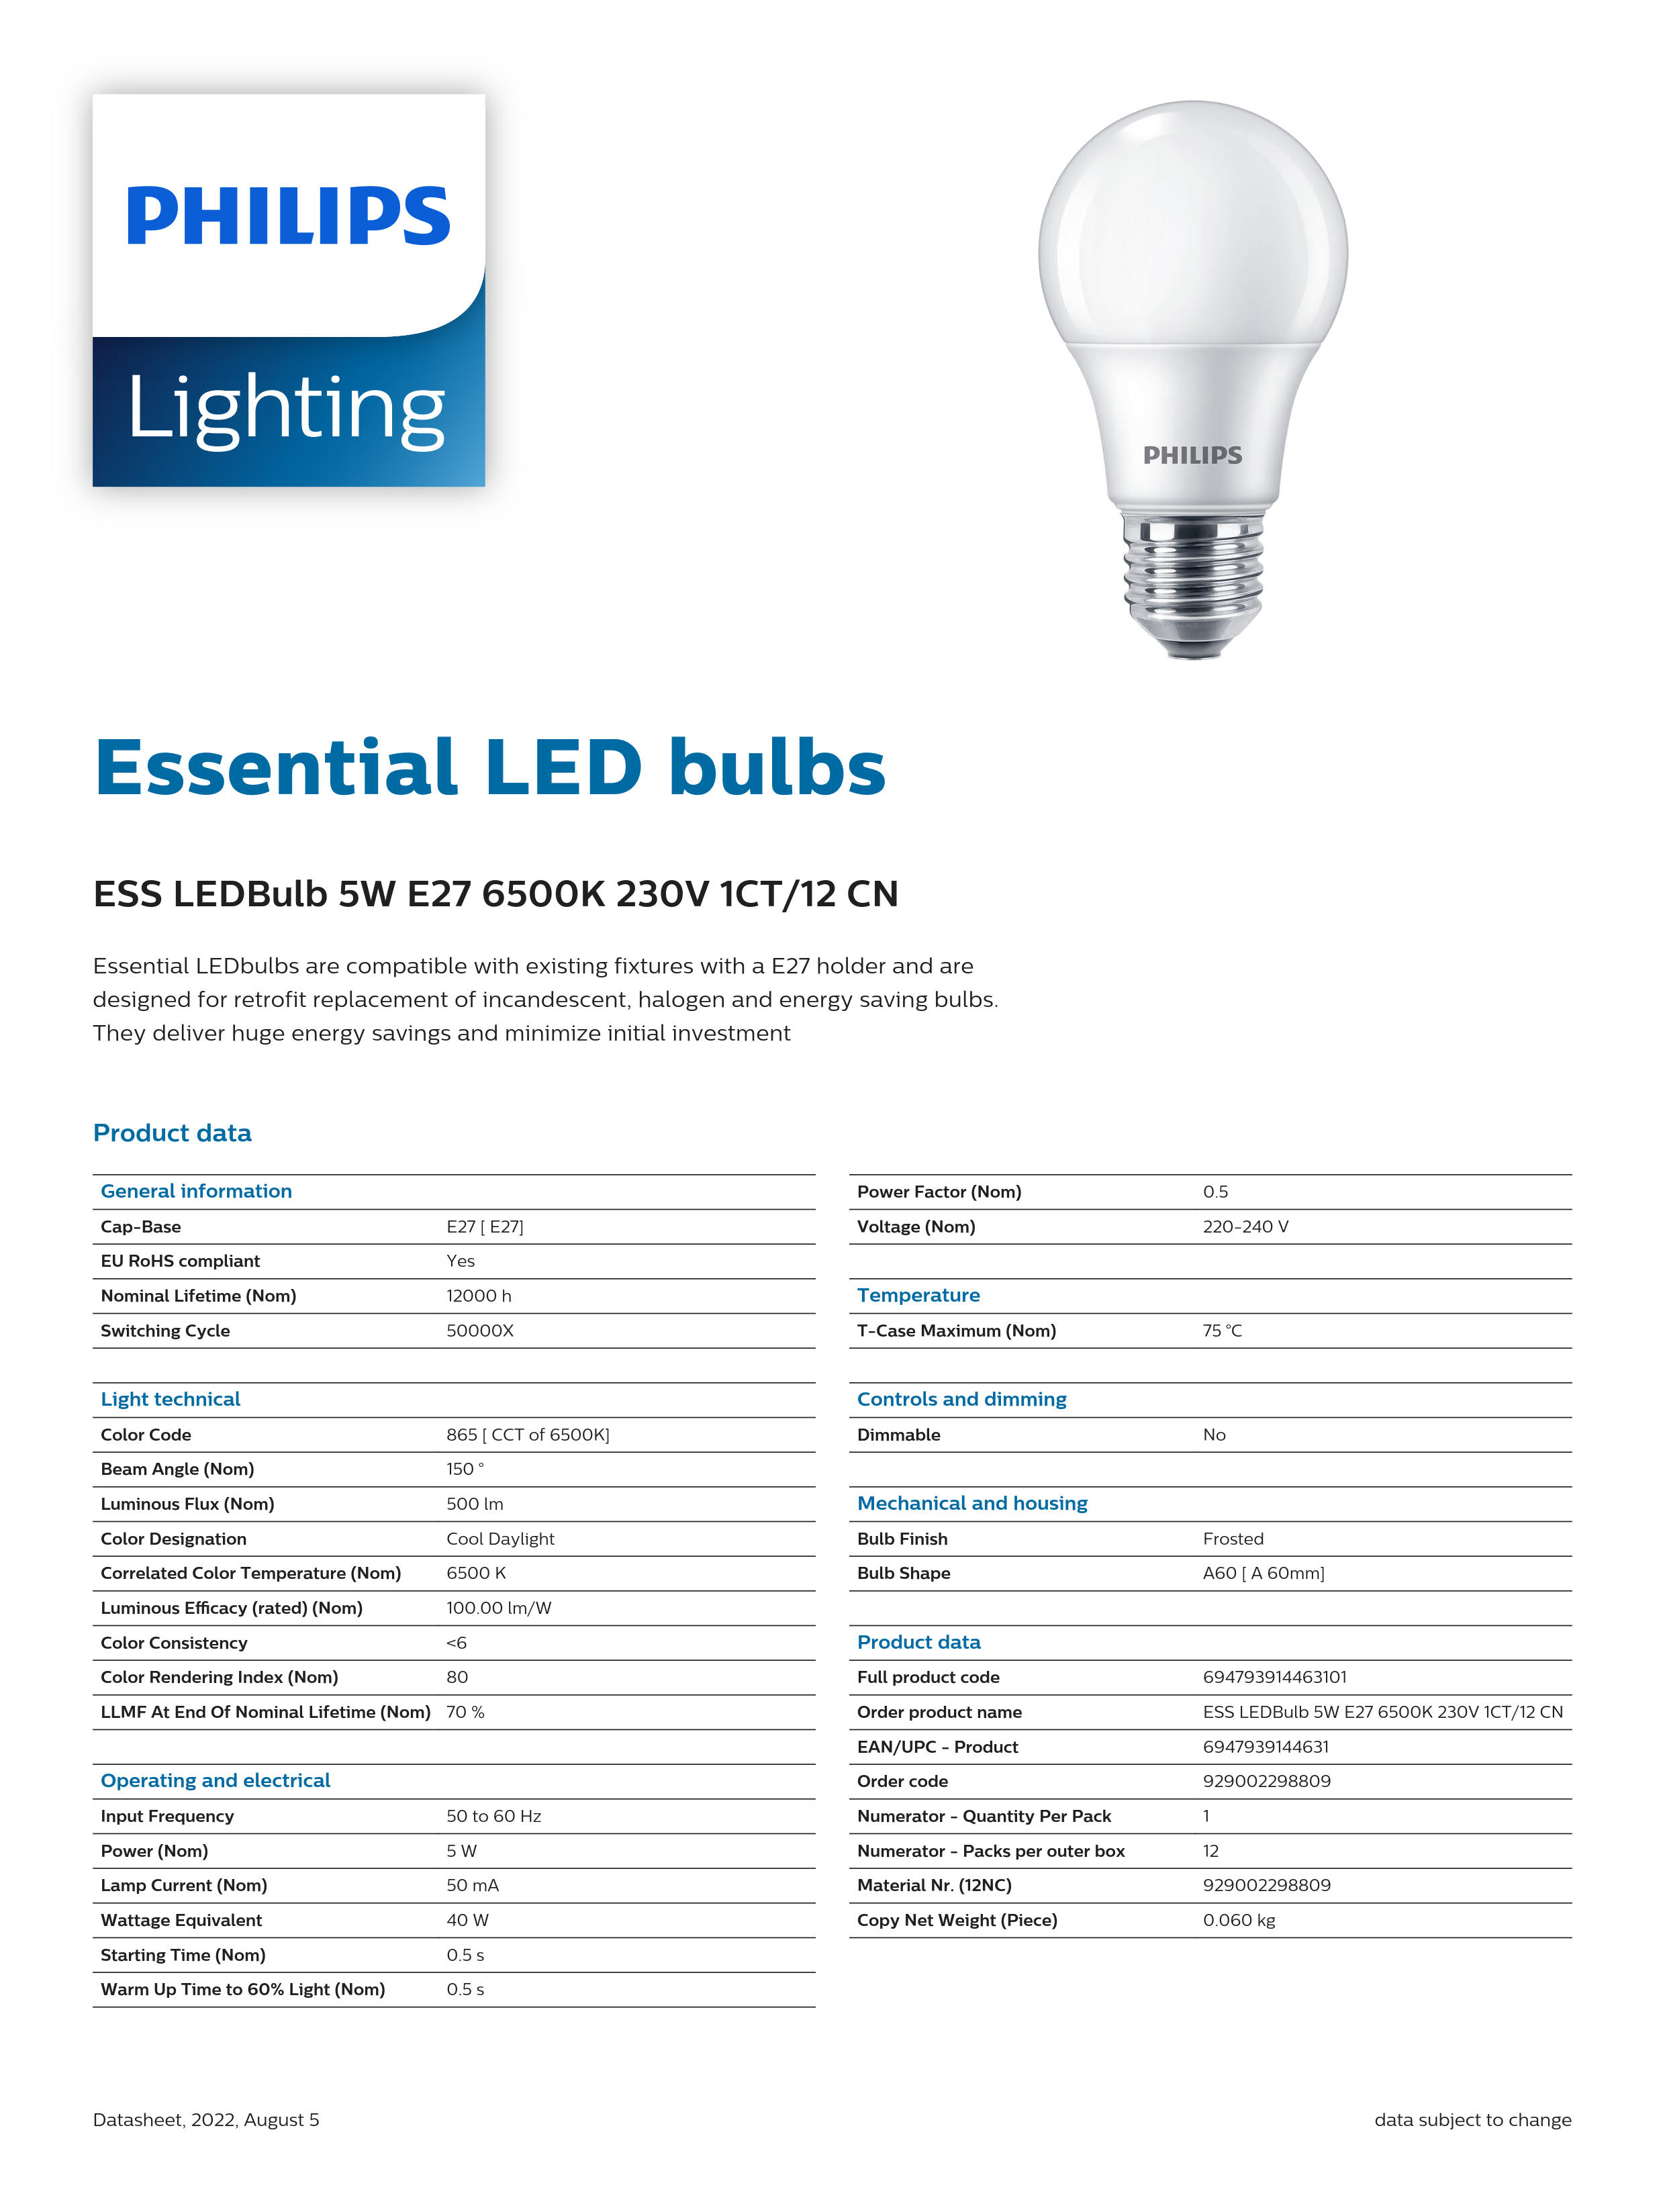 PHILIPS Essential LED bulbs 5W E27 6500K 230V 1CT/12 CN 929002298809